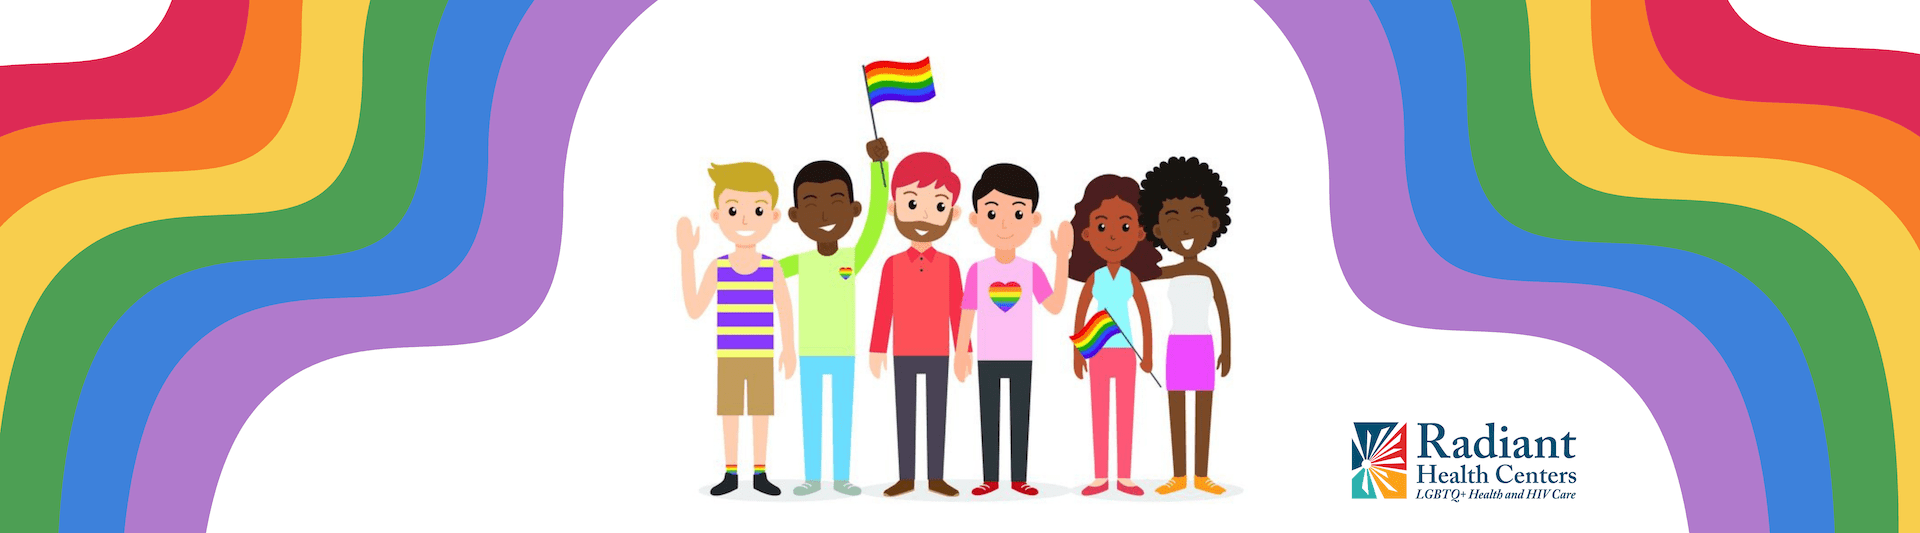 Support LGBTQ+ Mental Health Pride Month